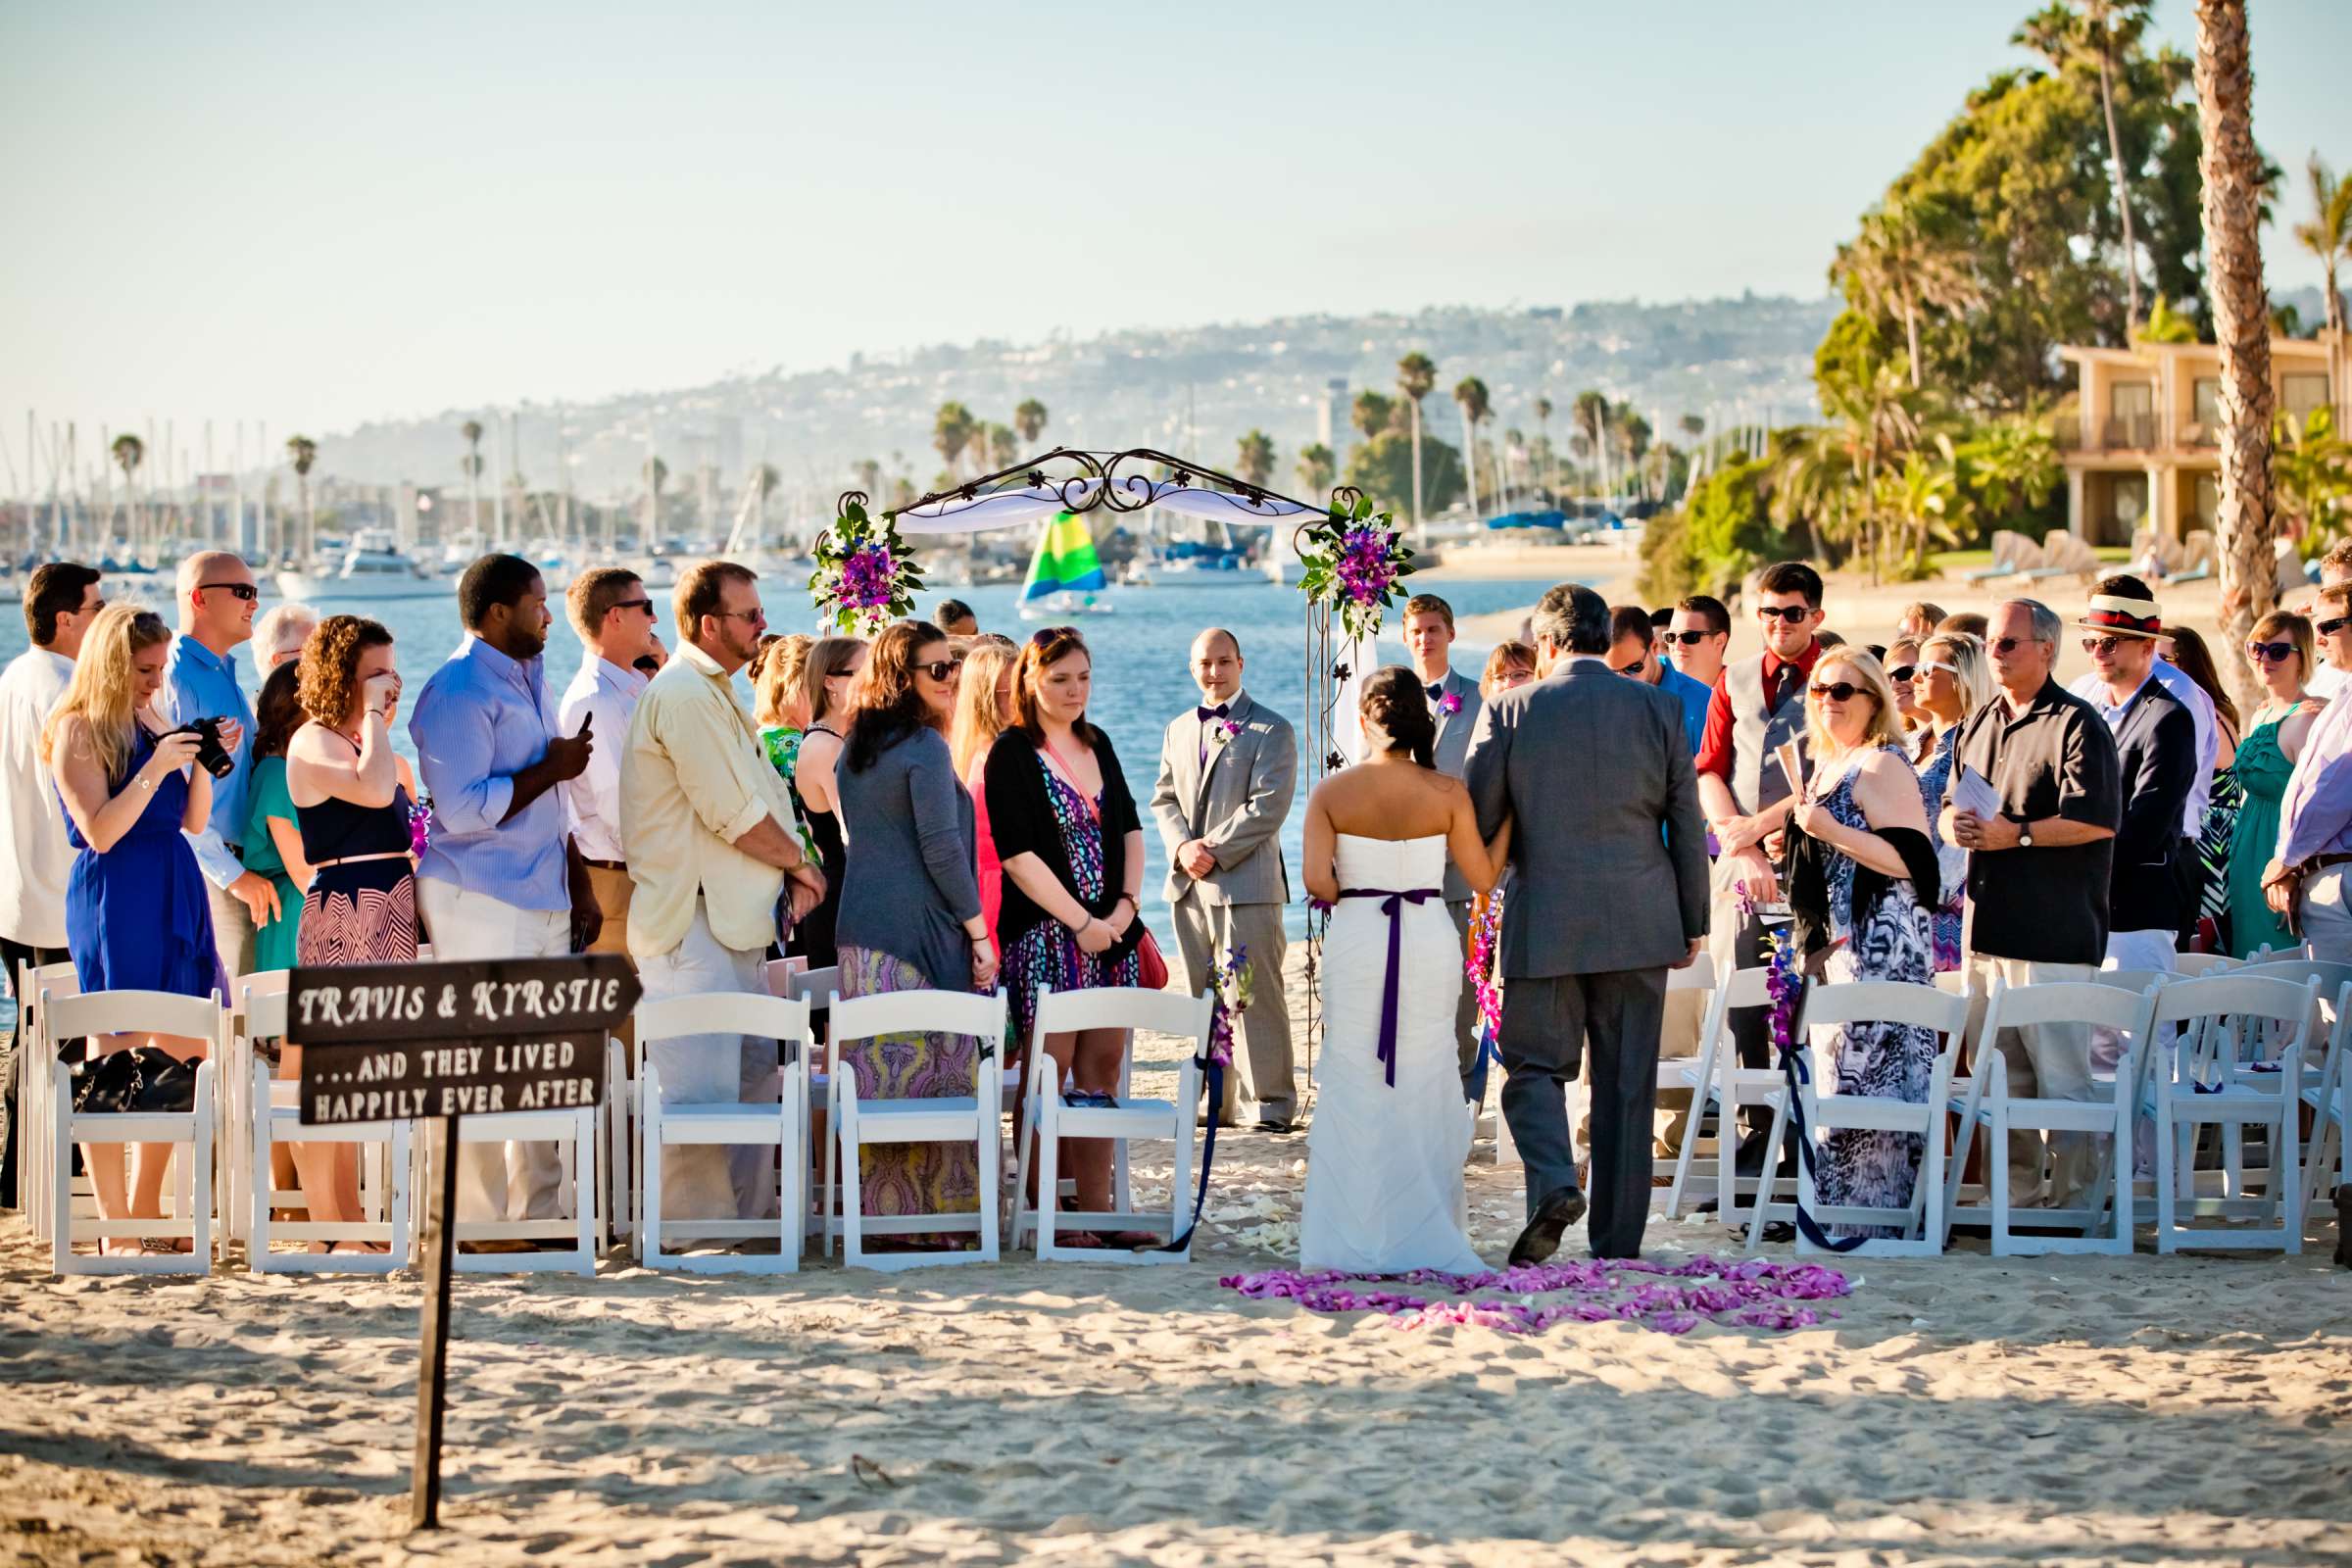 Beach at Bahia Hotel Wedding, Kyrstie and Travis Wedding Photo #128566 by True Photography